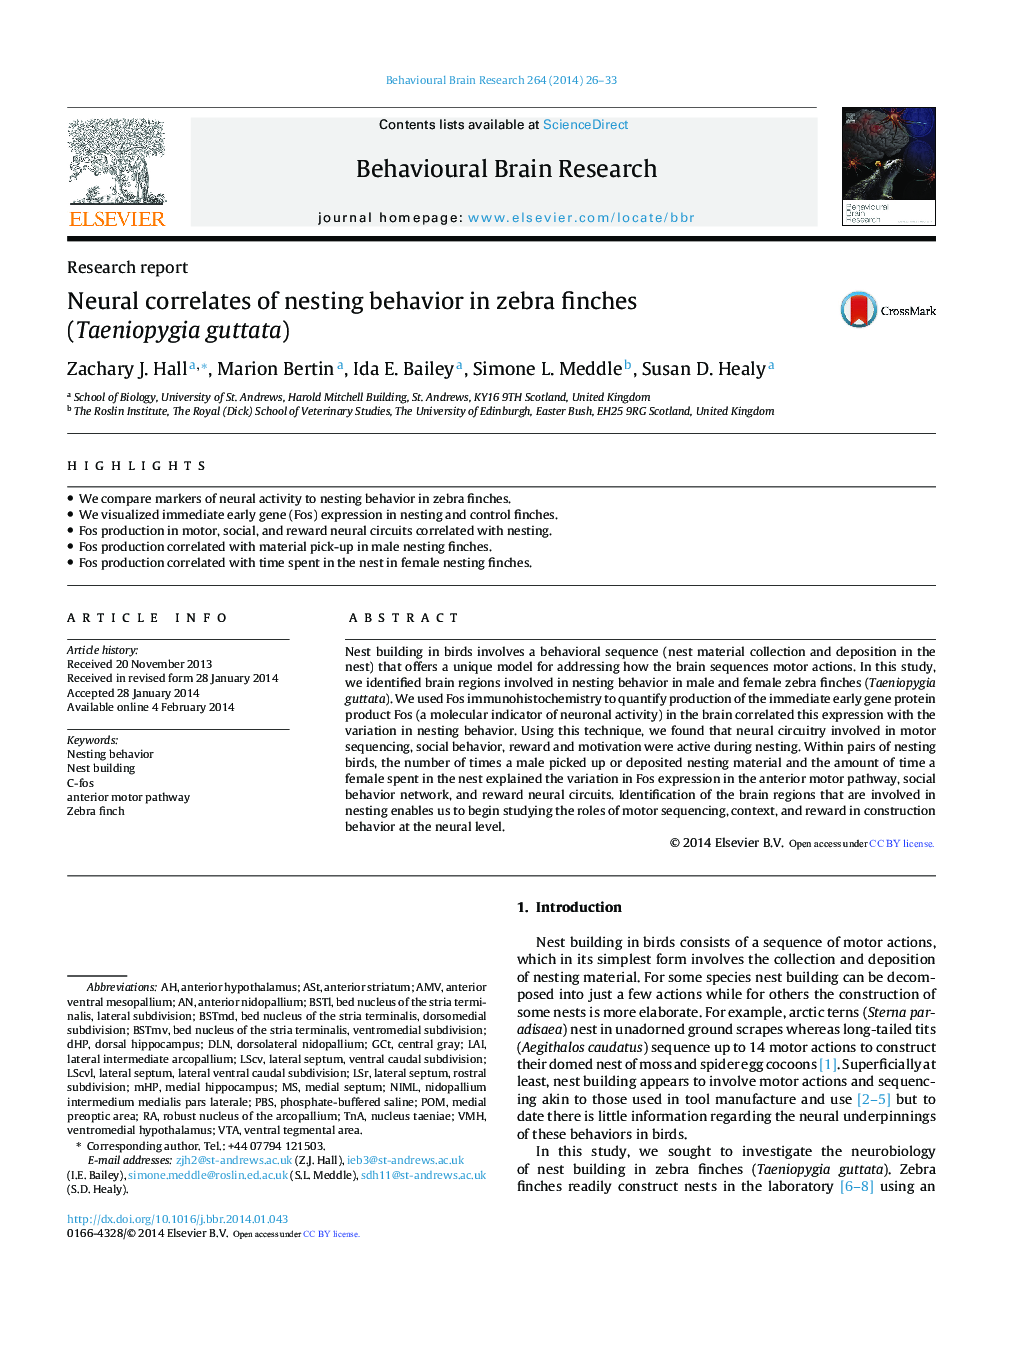 Research reportNeural correlates of nesting behavior in zebra finches (Taeniopygia guttata)